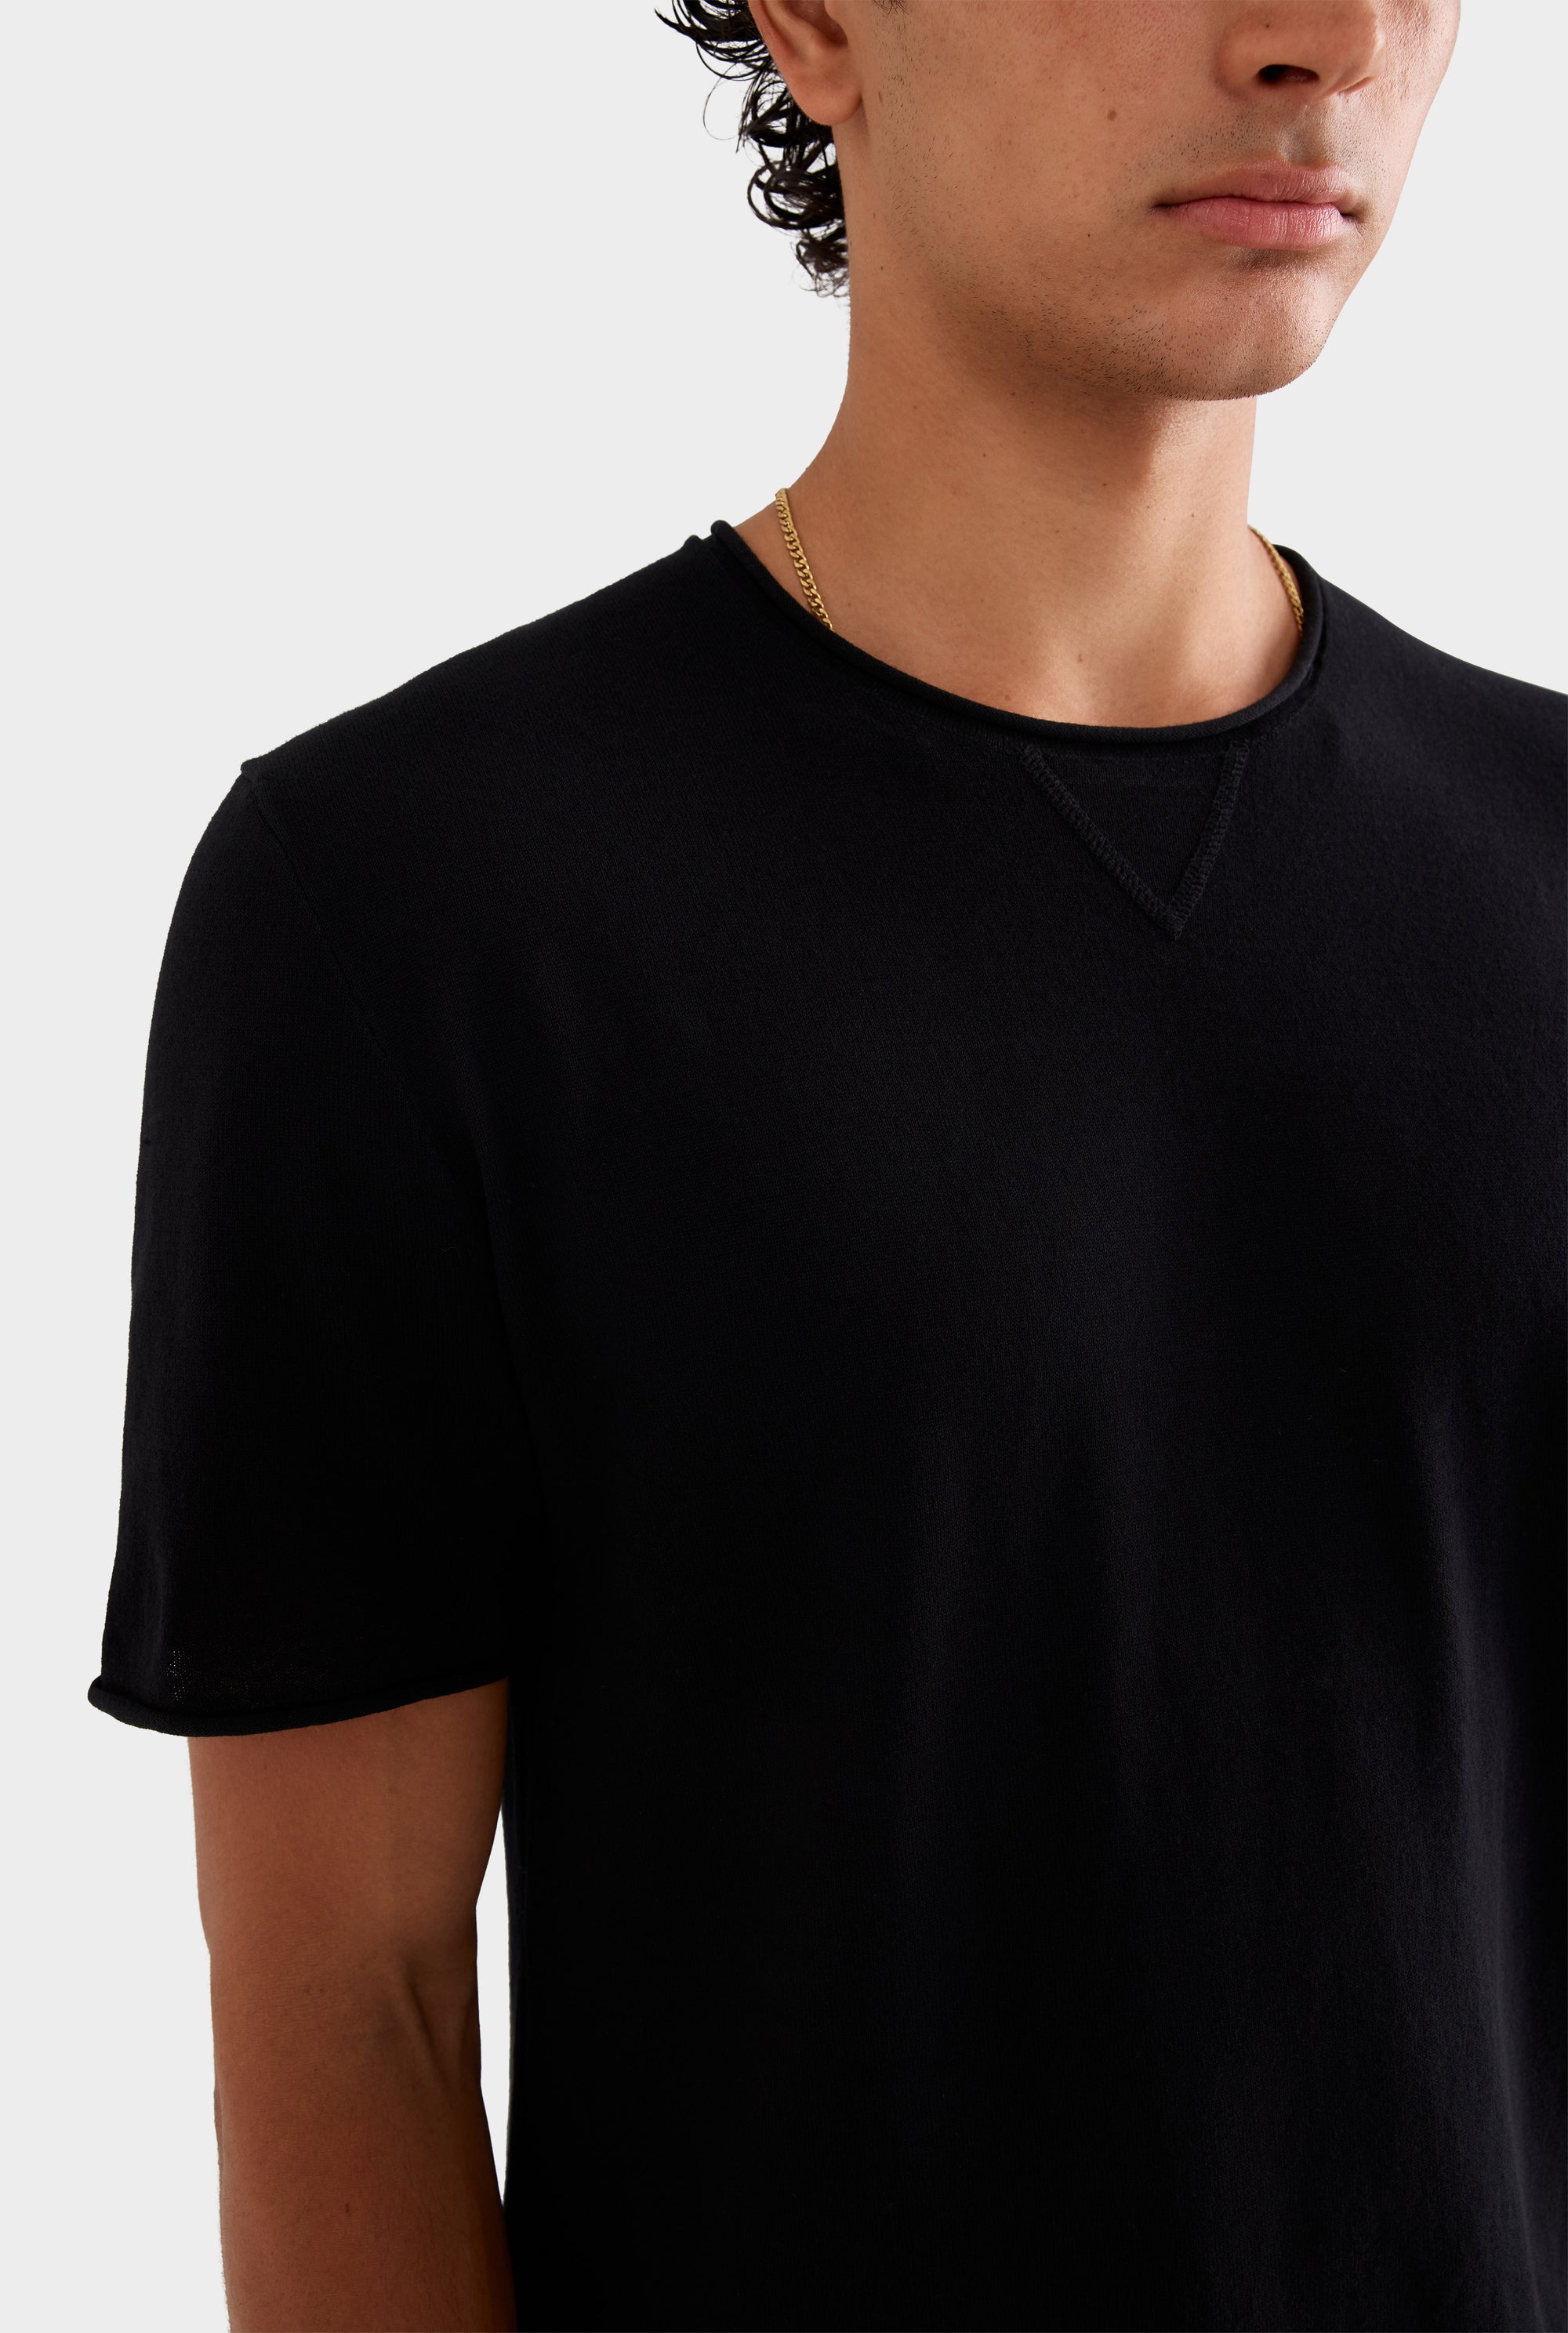 Rolled Edge Cotton Knit T-Shirt - Black